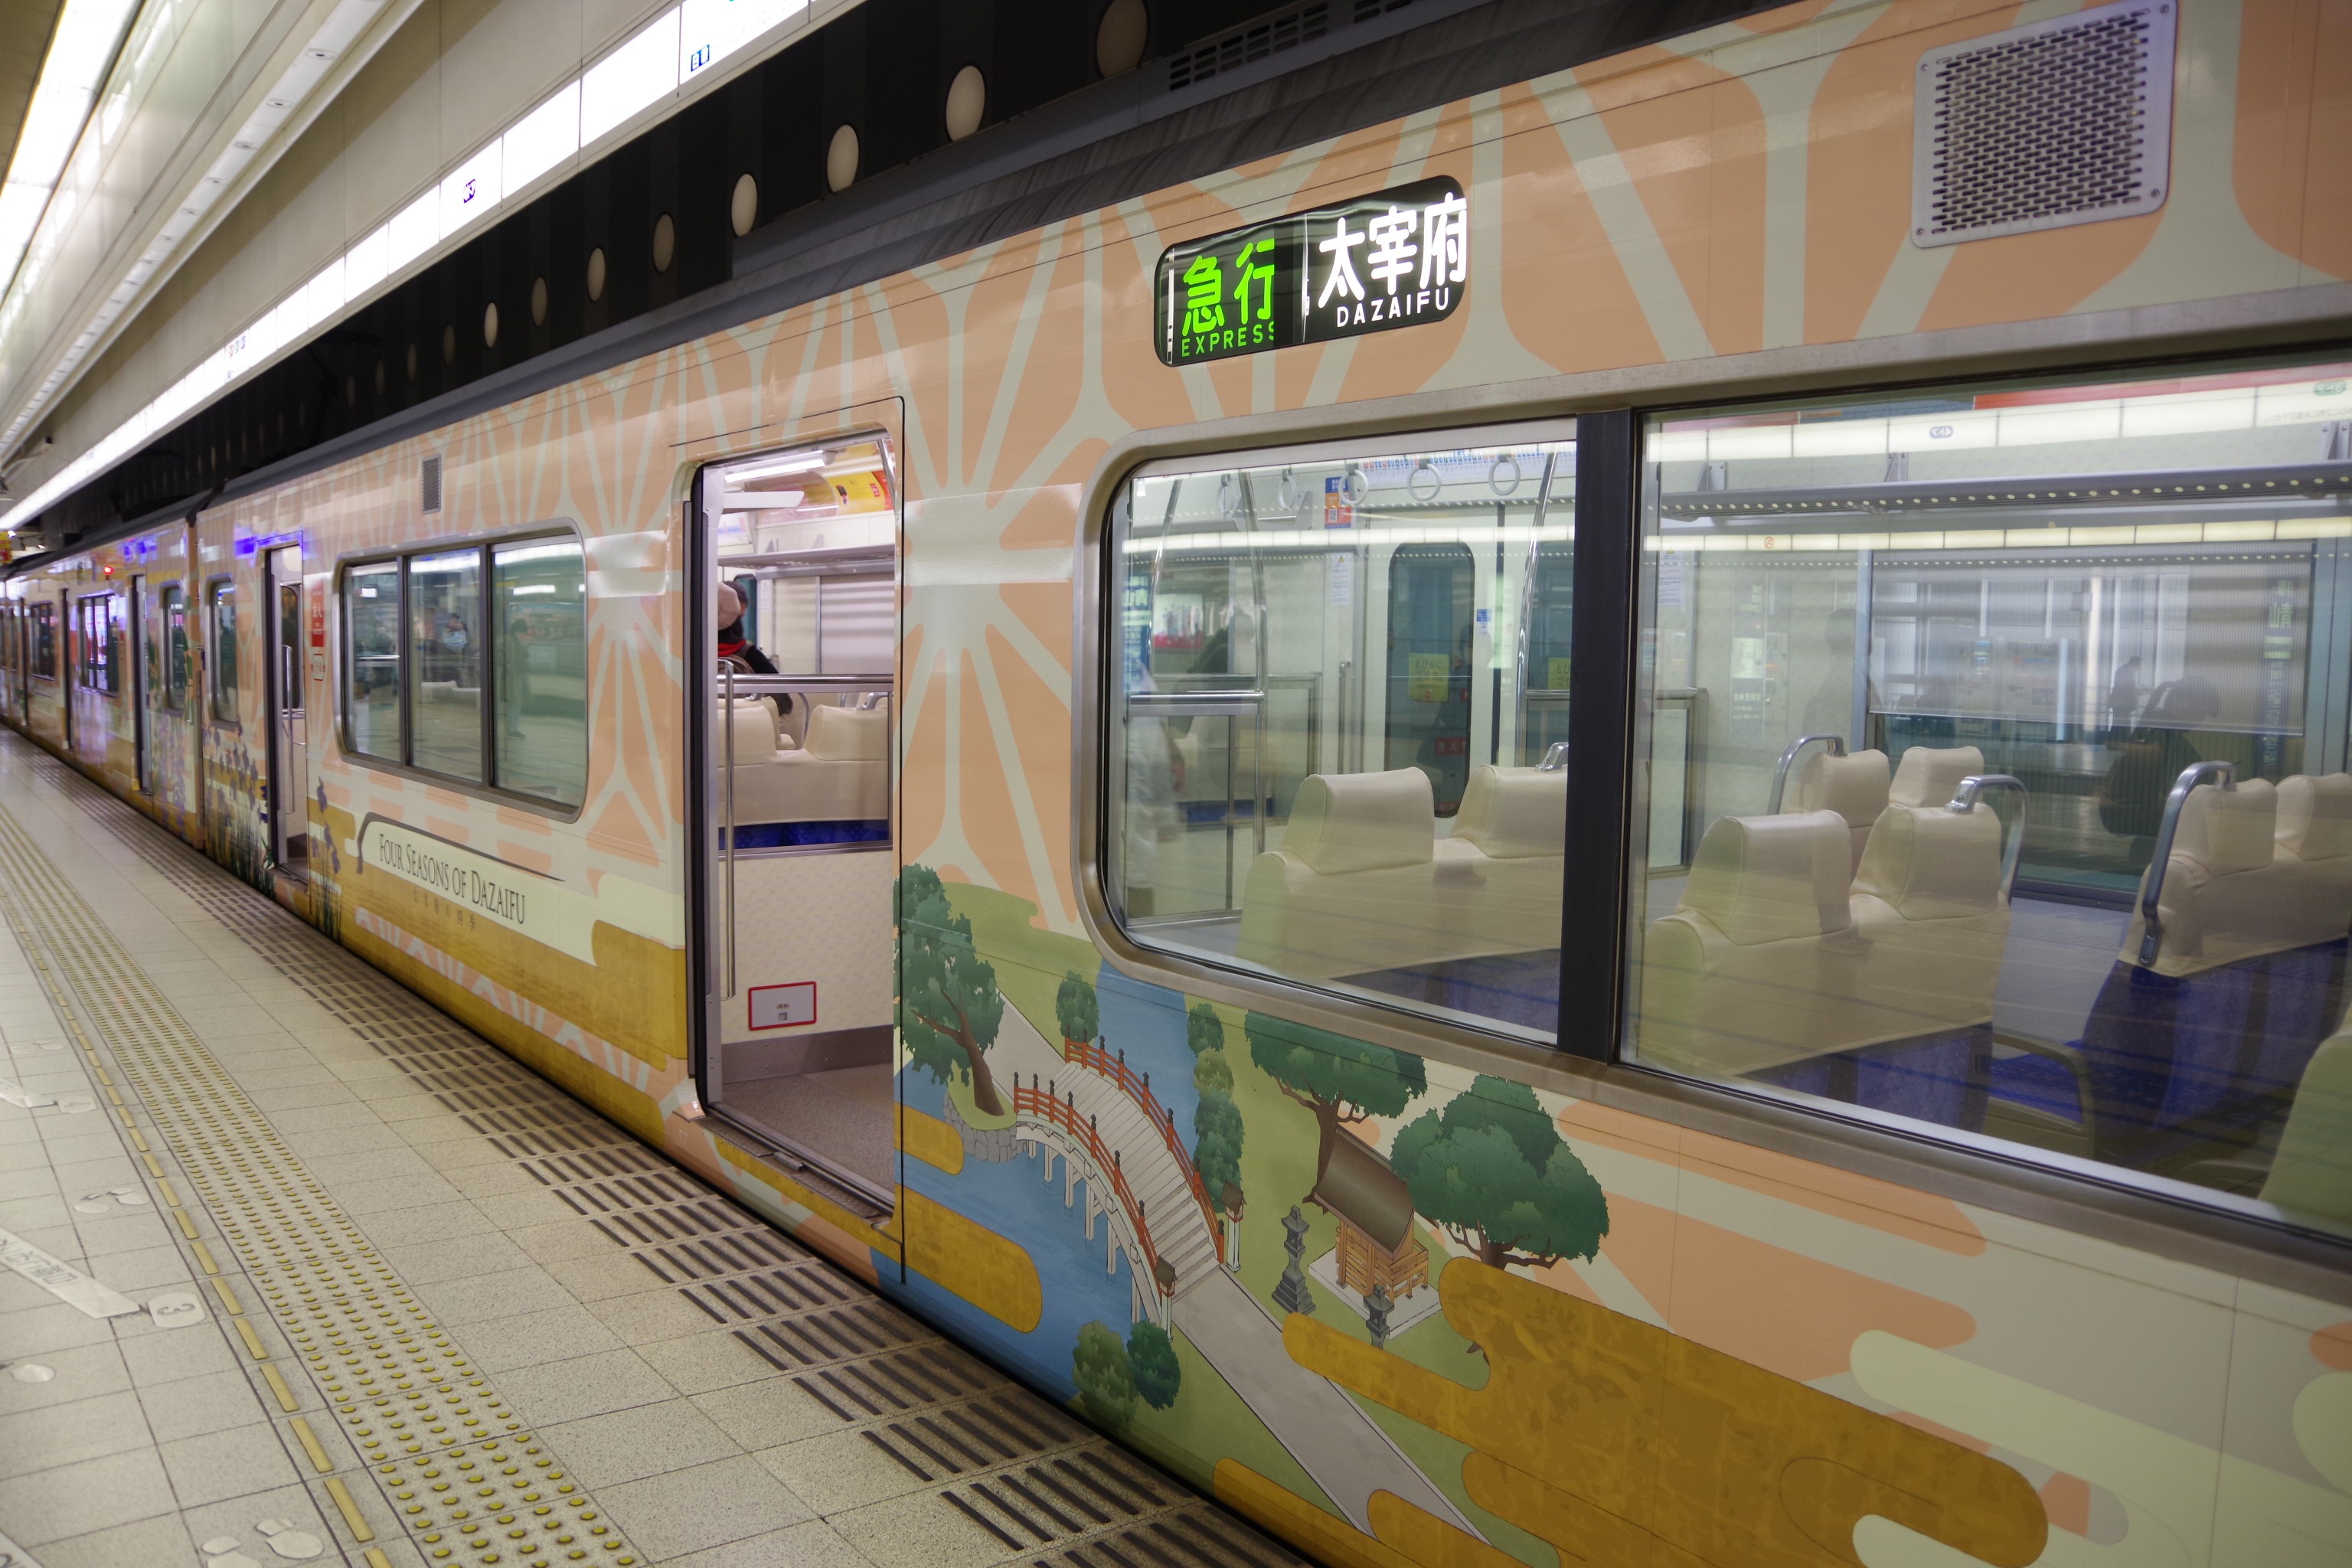 Dazaifu sightseeing train 